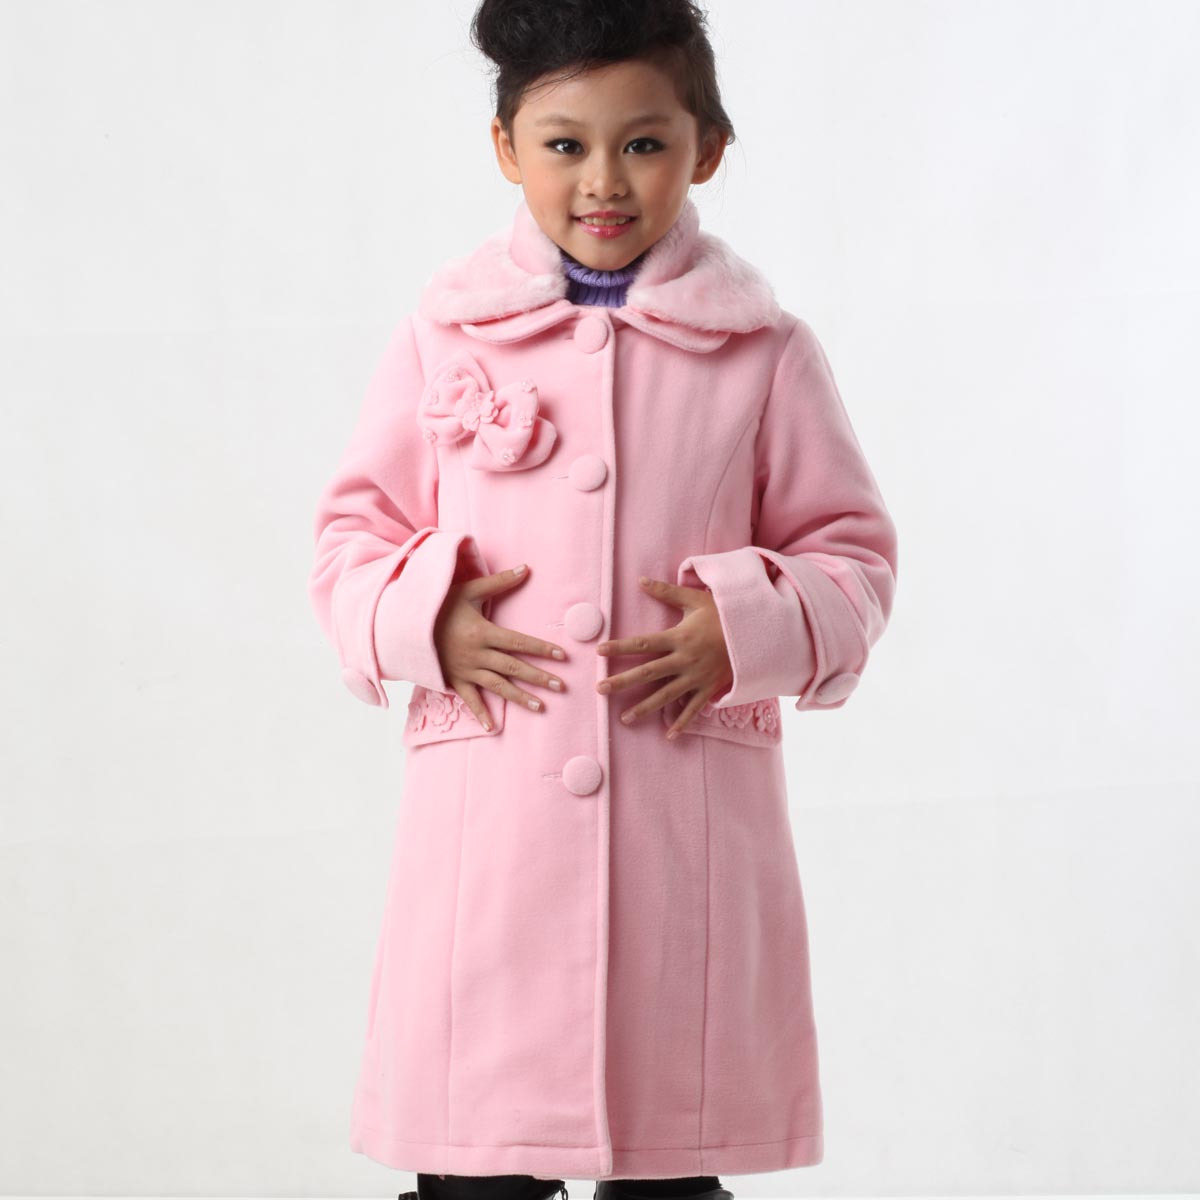 Children's clothing outerwear female child wool coat 2013 spring child tank dress child woolen trench